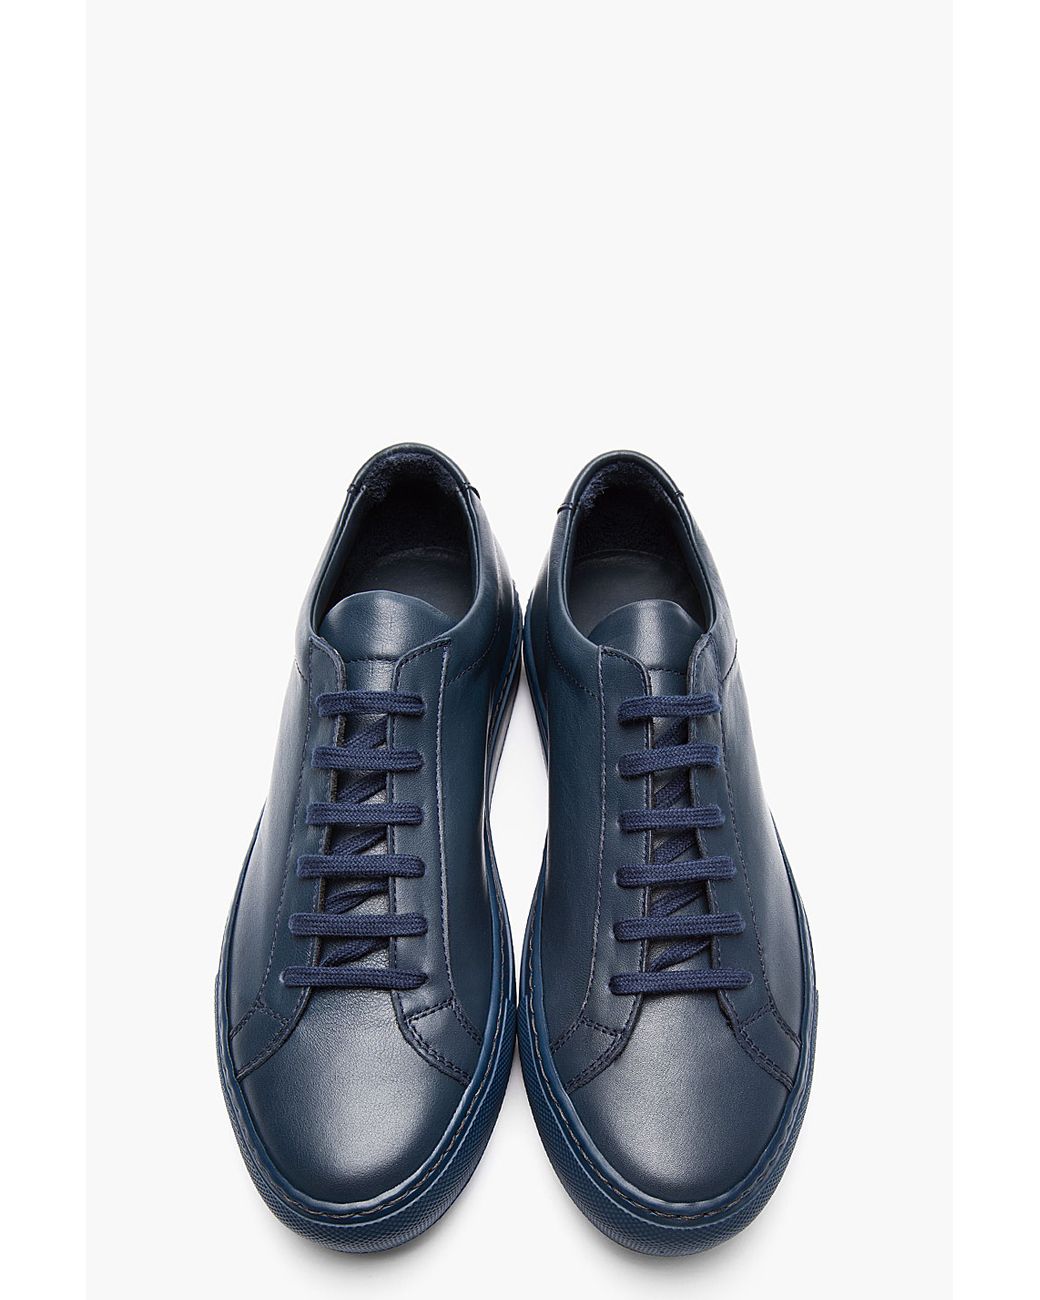 Cole Haan - Grandpro Tennis Navy Blue Leather Sneaker